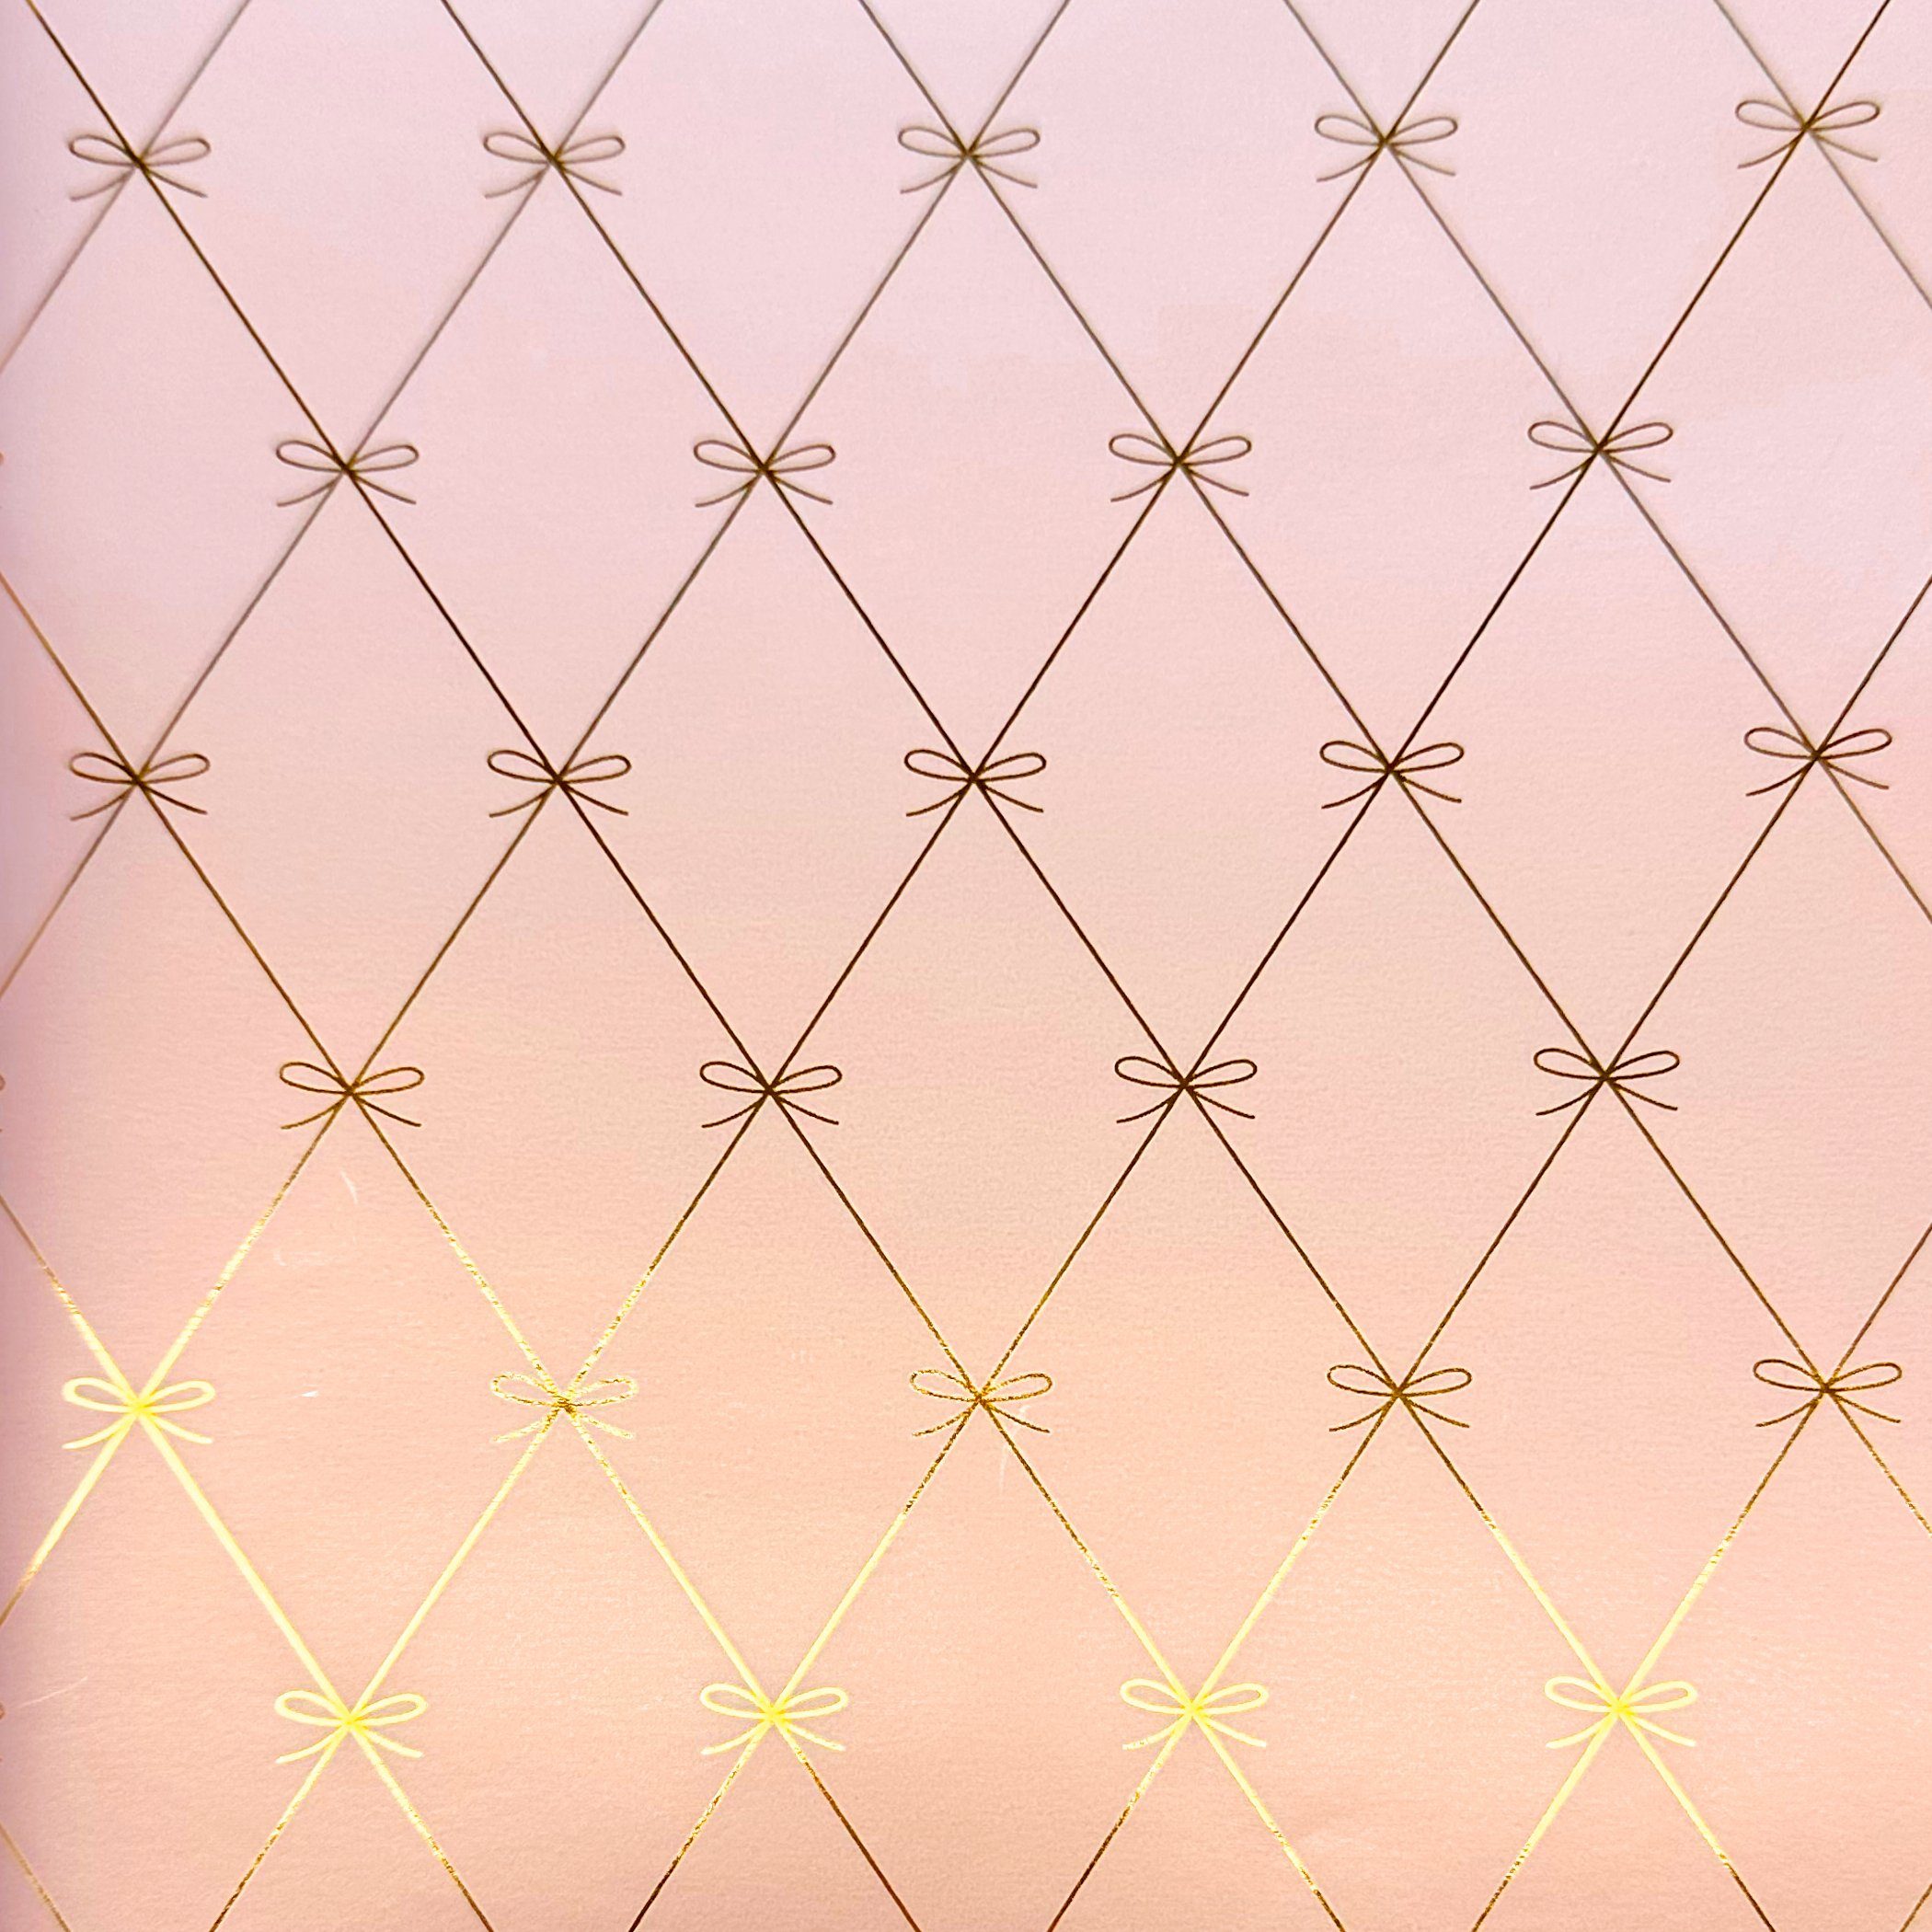 Star Пакувальний папір, Пакувальний папір mit Schleifen Muster 70cm x 2m Rolle rosa metallic matt